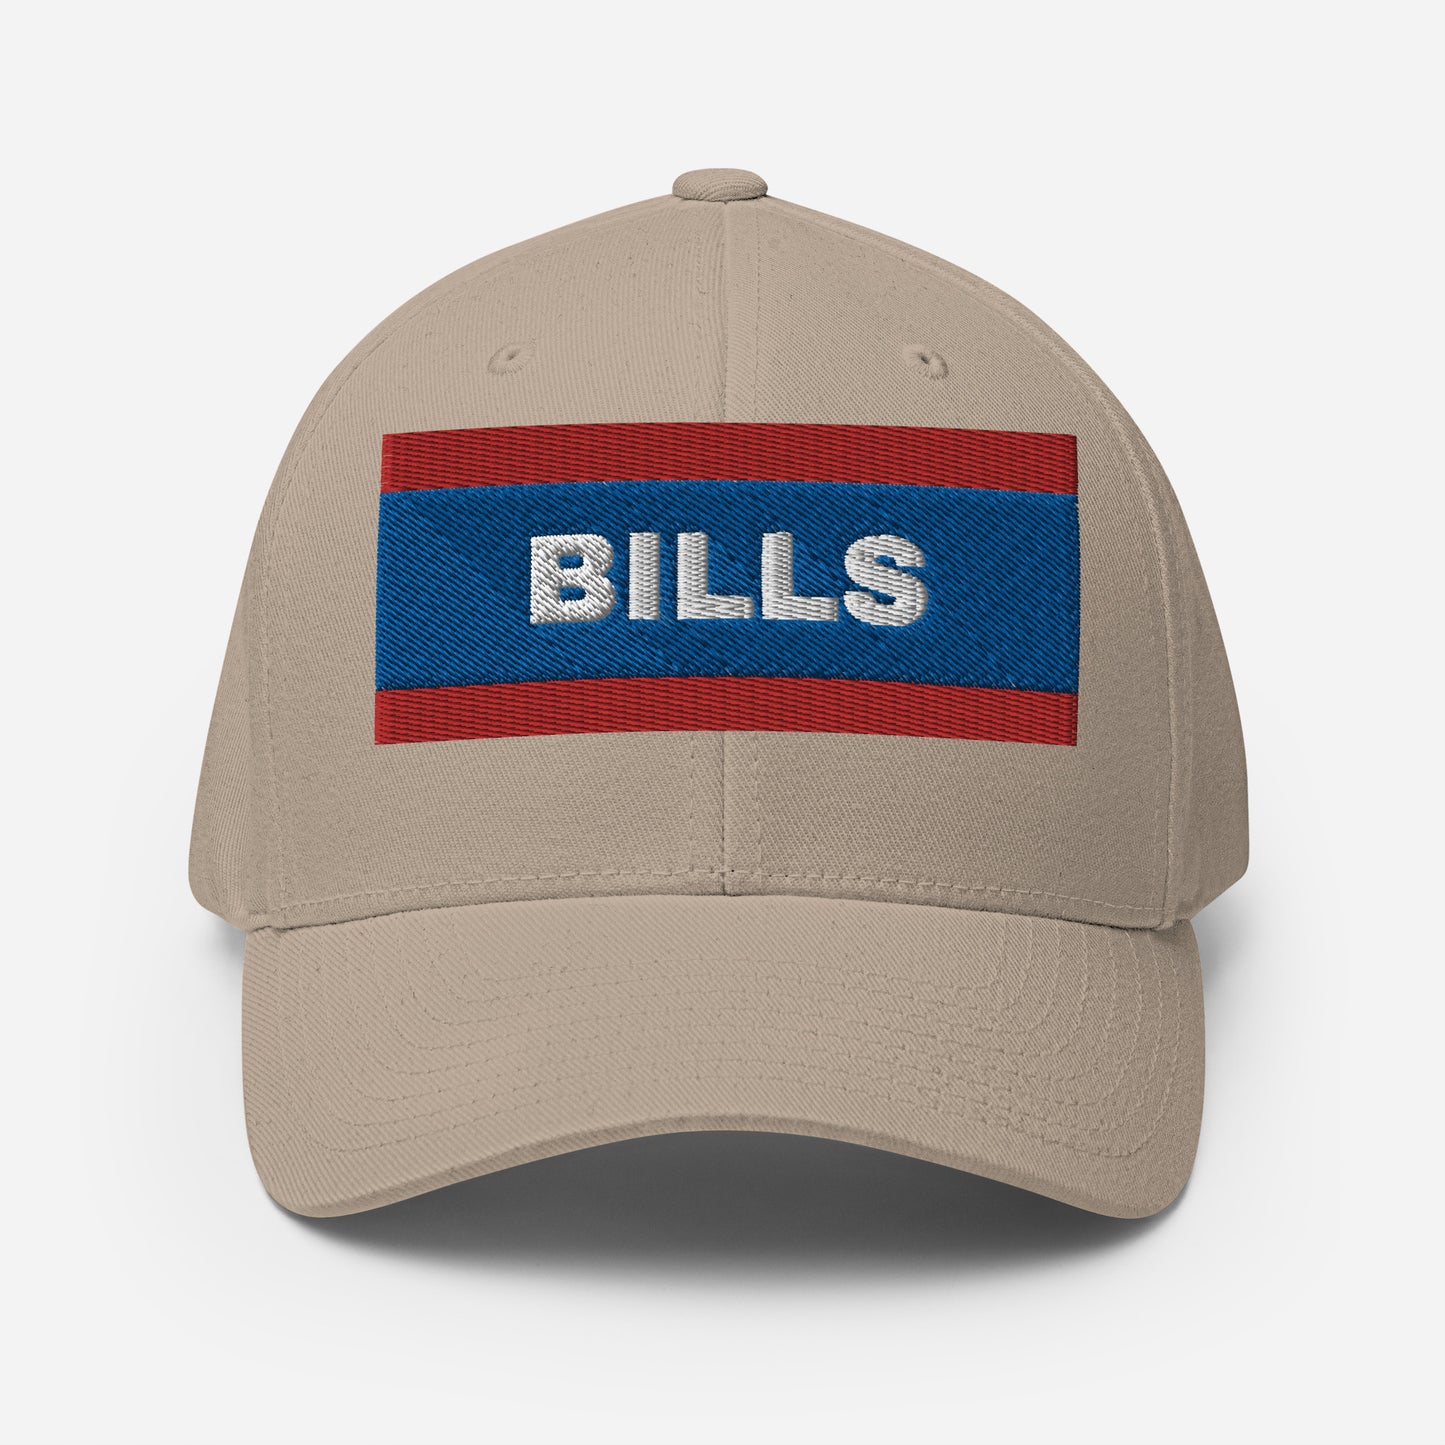 Bills Preppy Dad Hat